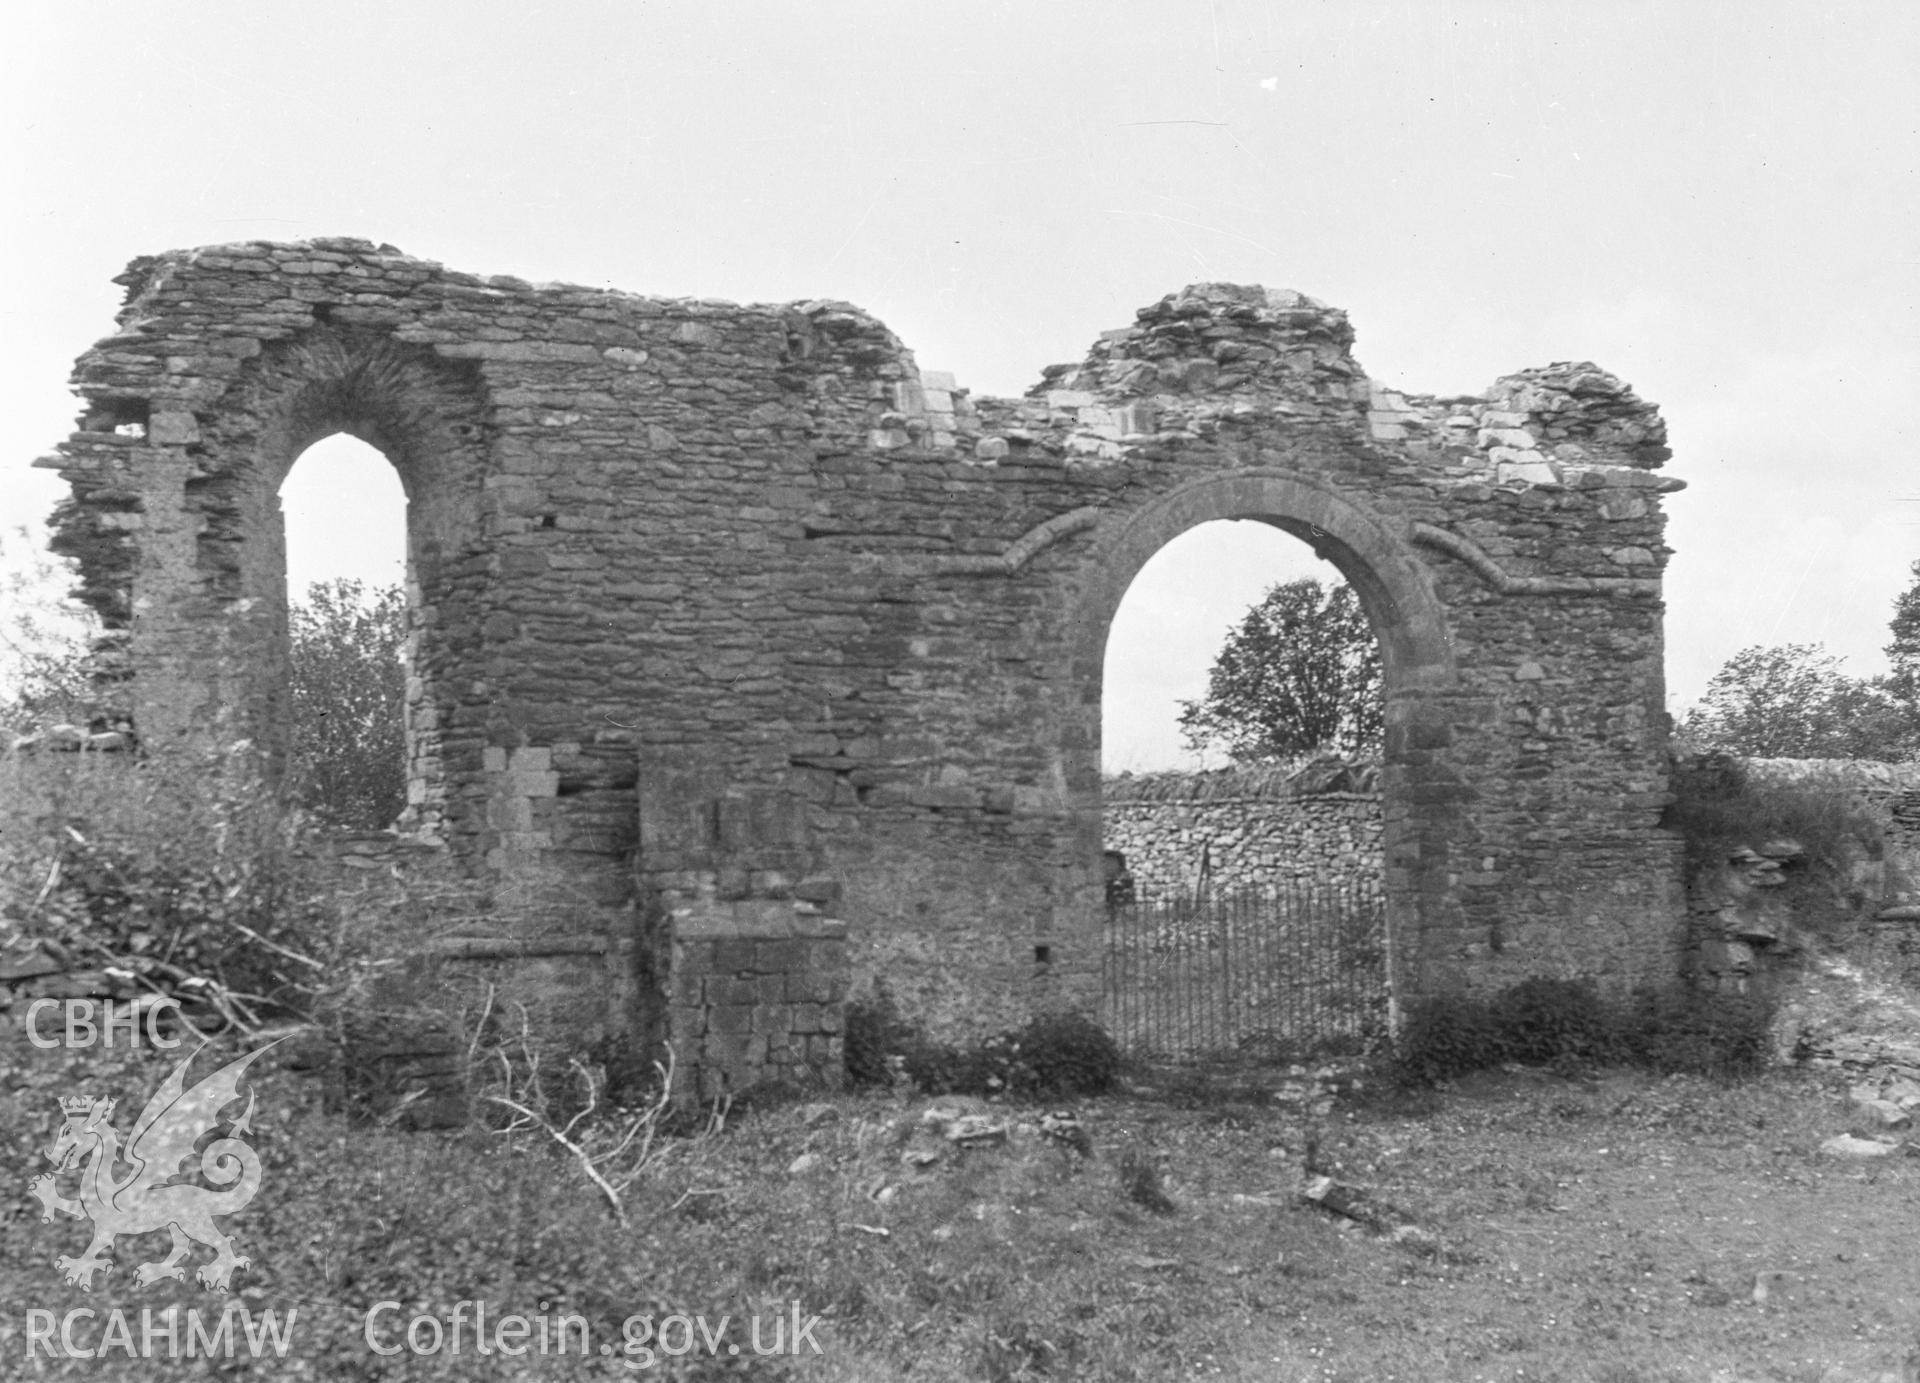 Digital copy of a nitrate negative showing view of ruinous wall possibly Rhuddlan, taken by Leonard Monroe.